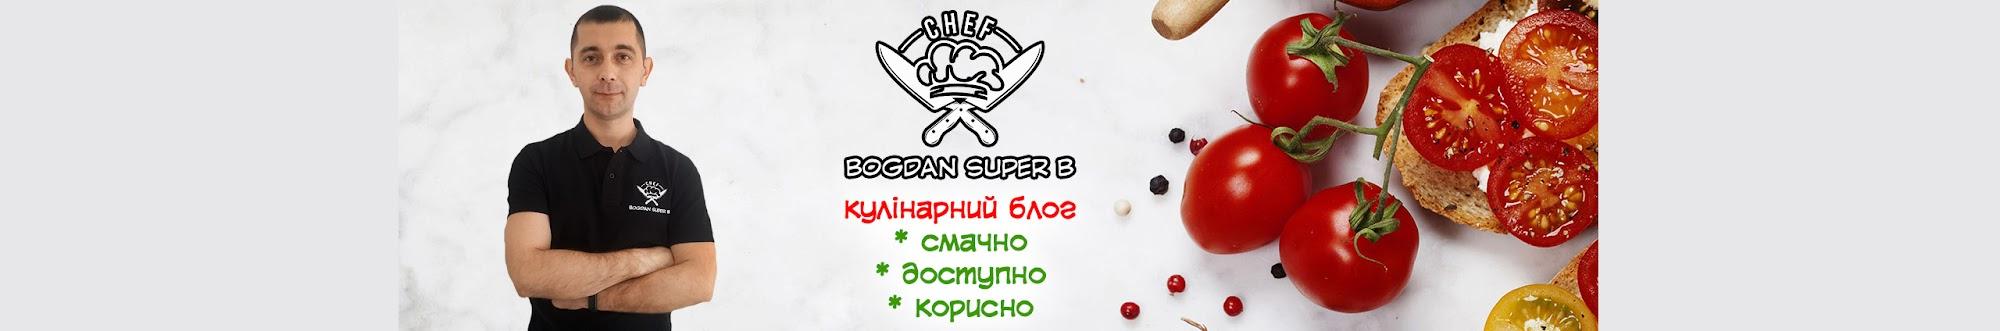 Bogdan Super B